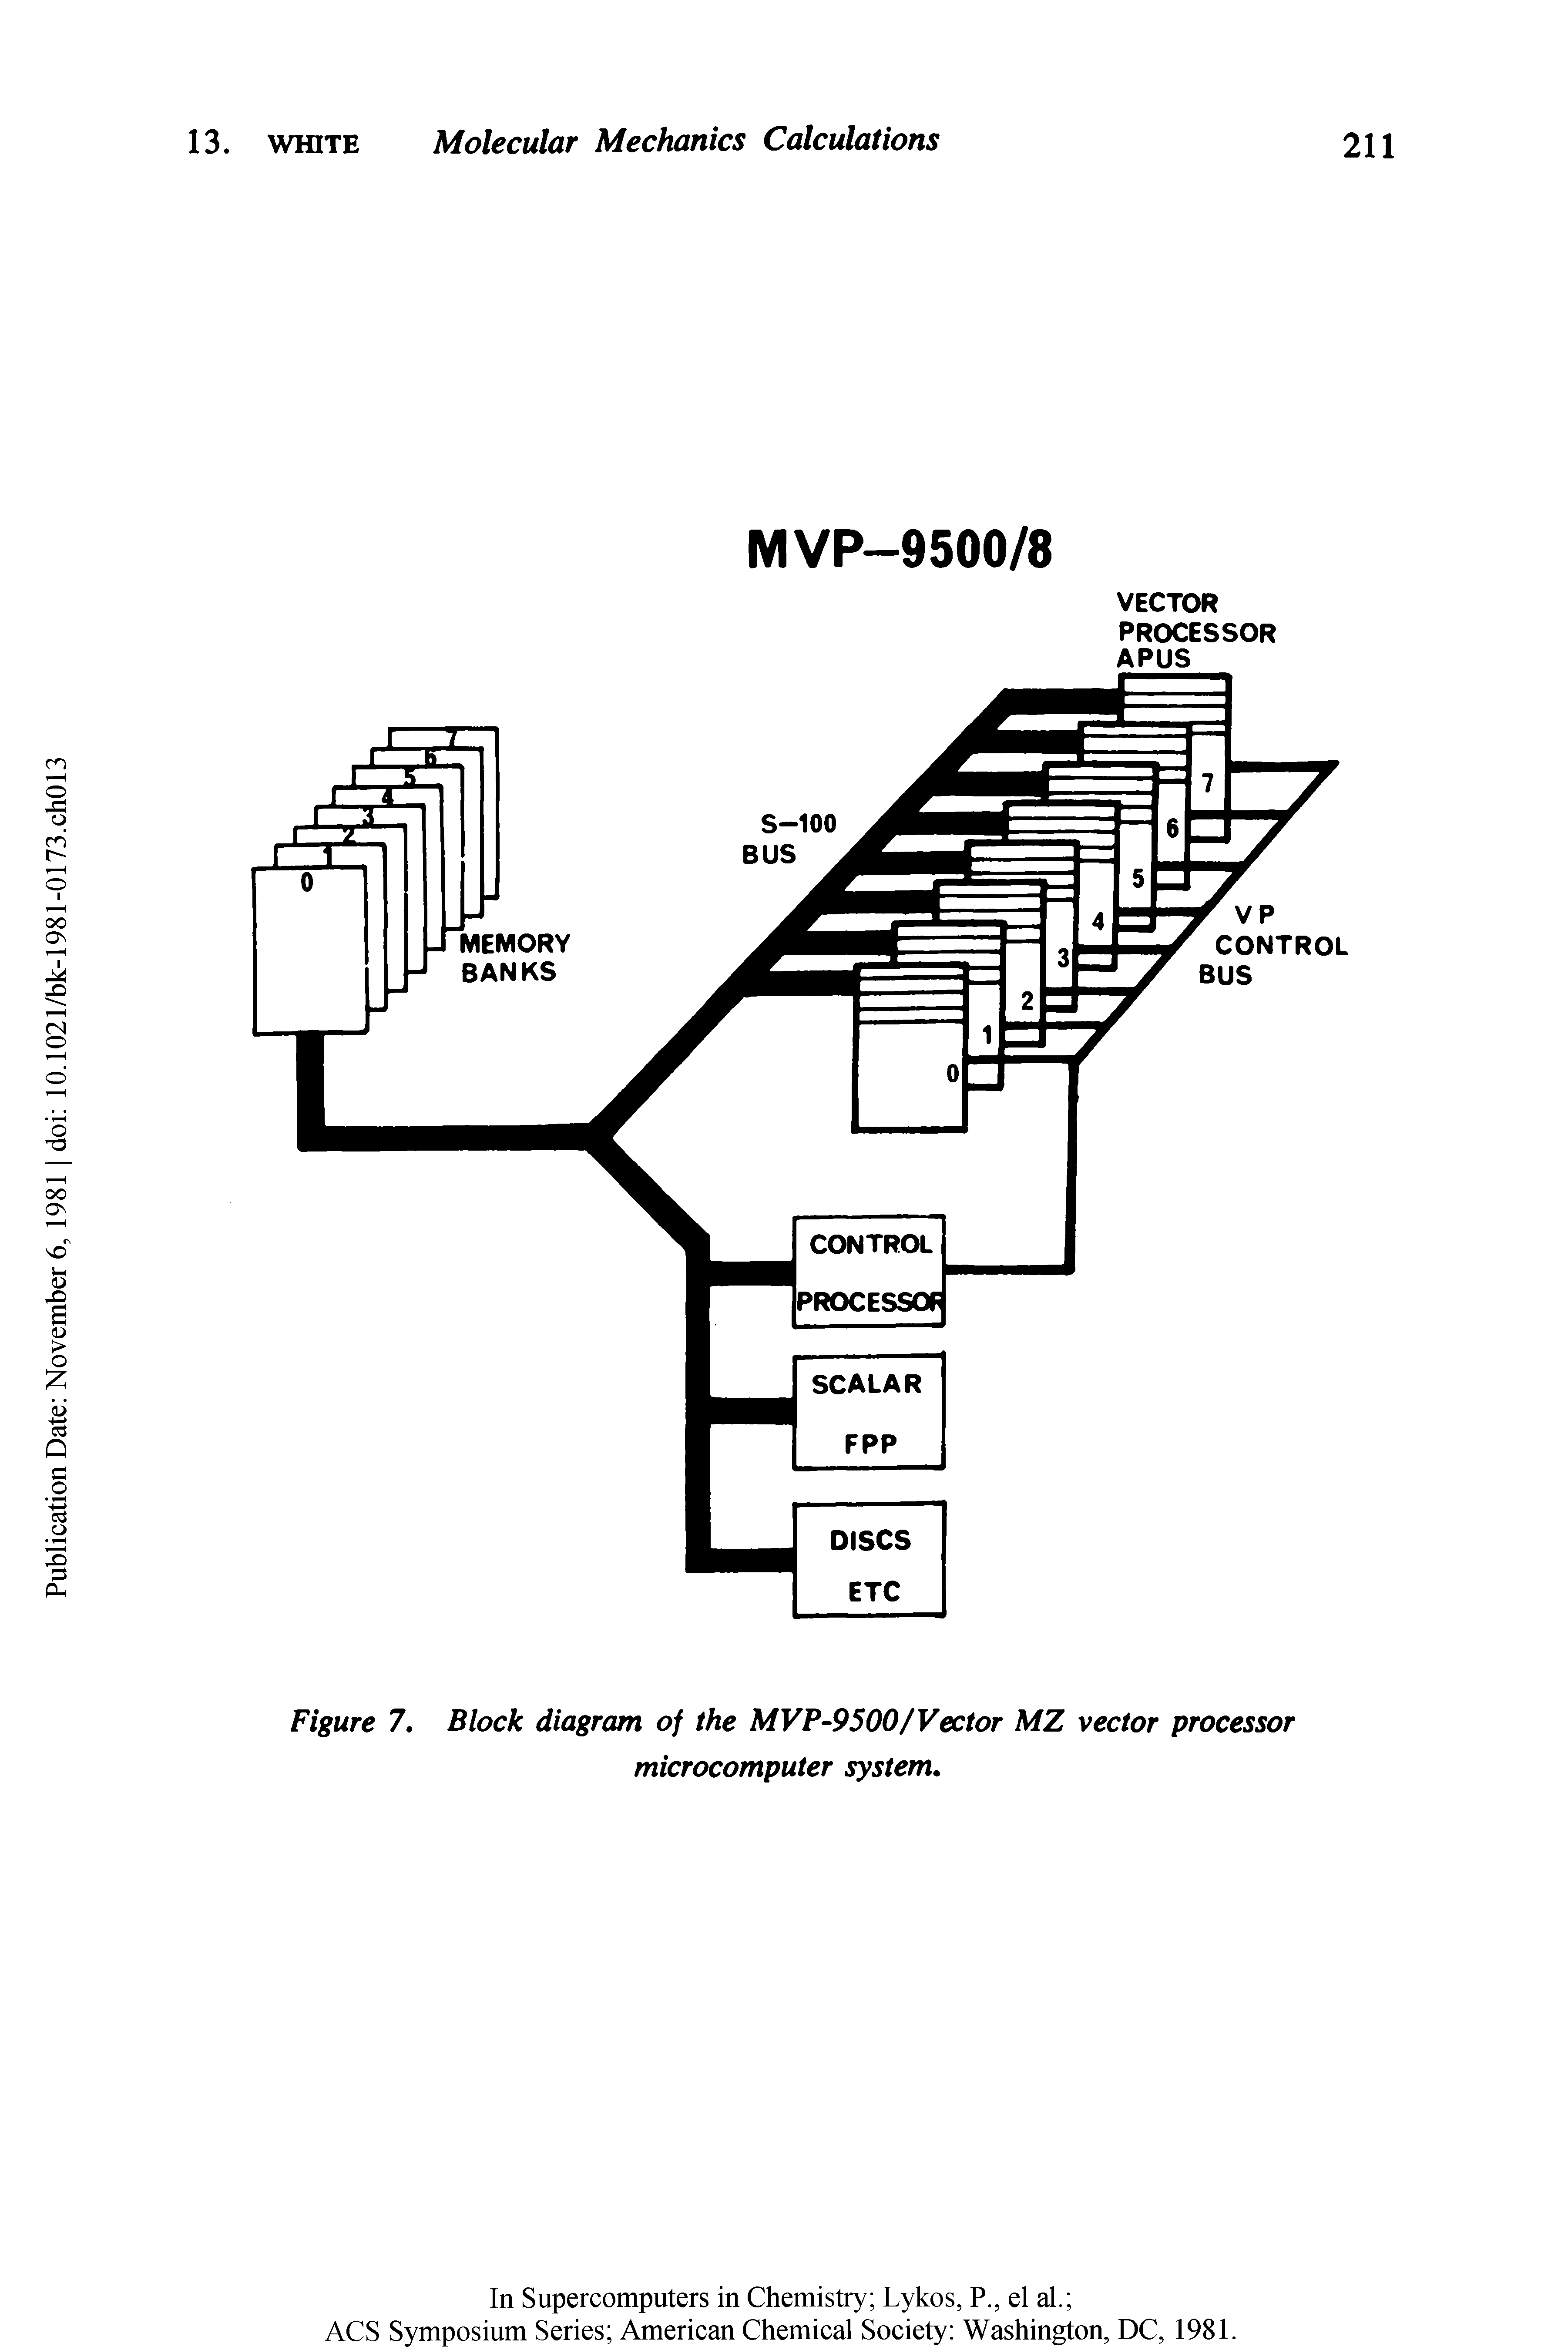 Figure 7. Block diagram of the MVP-9500/Vector MZ vector processor microcomputer system.